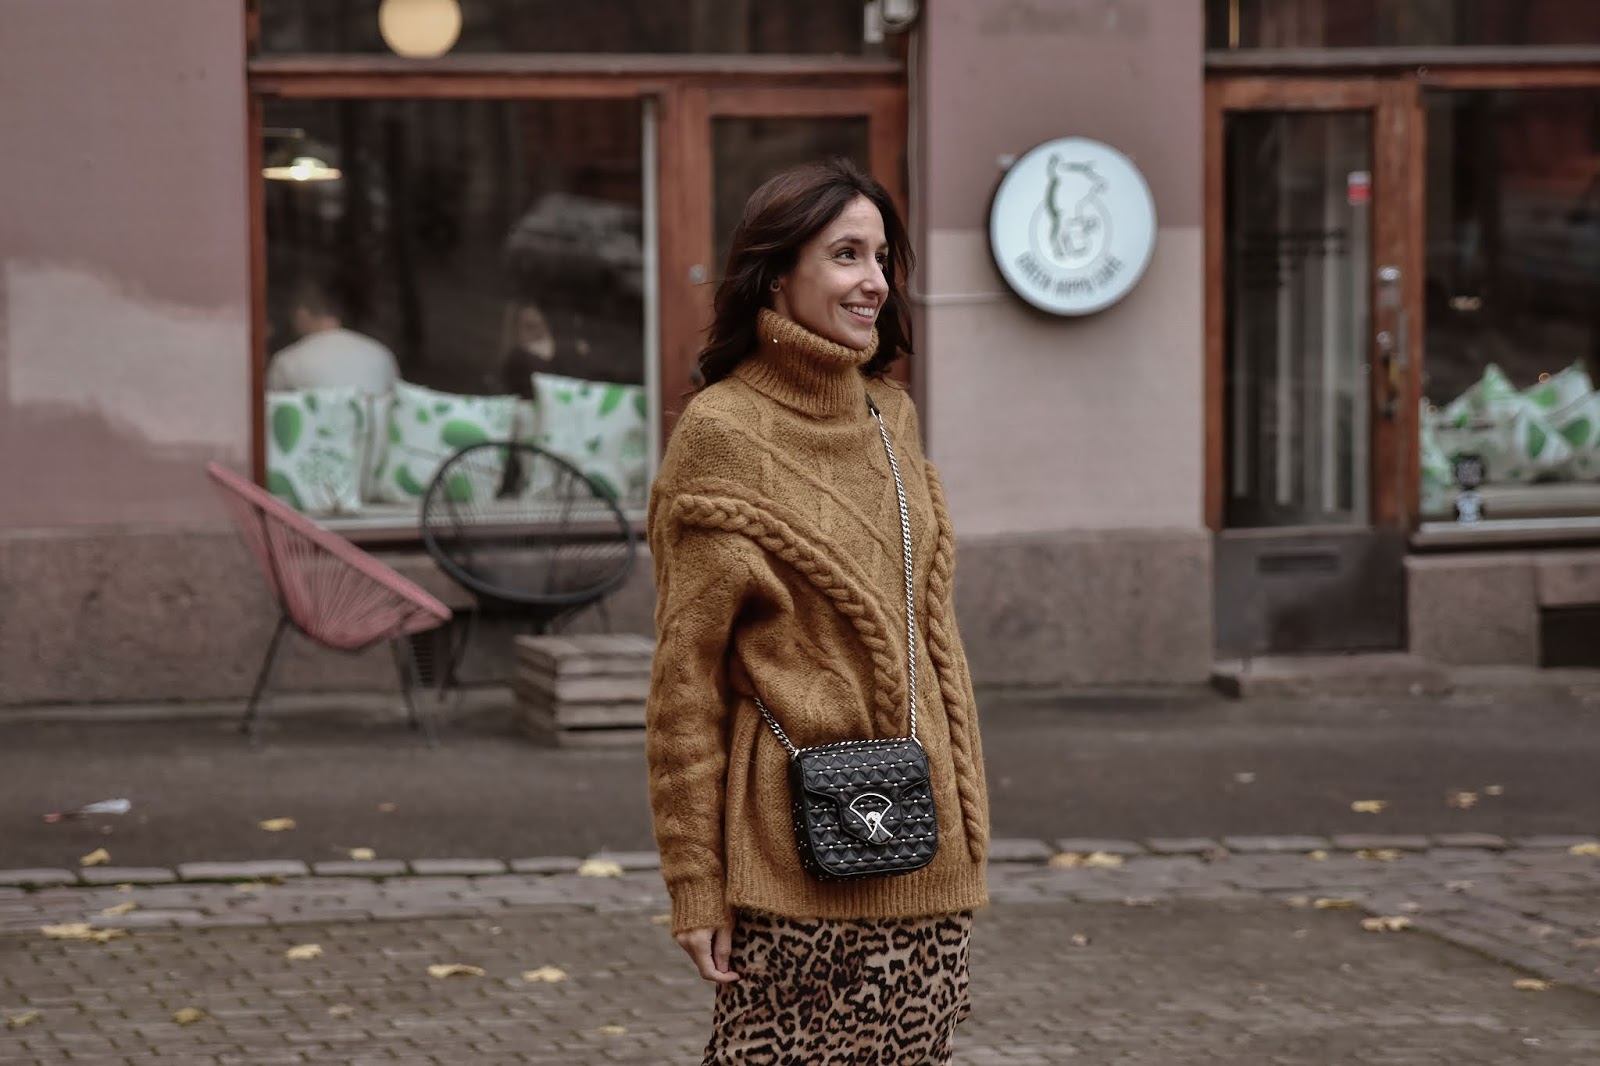 el-blog-de-silvia-rodriguez-lifestyle-travel-finlandia-helsinki-leopard-skirt-blogger-influencer